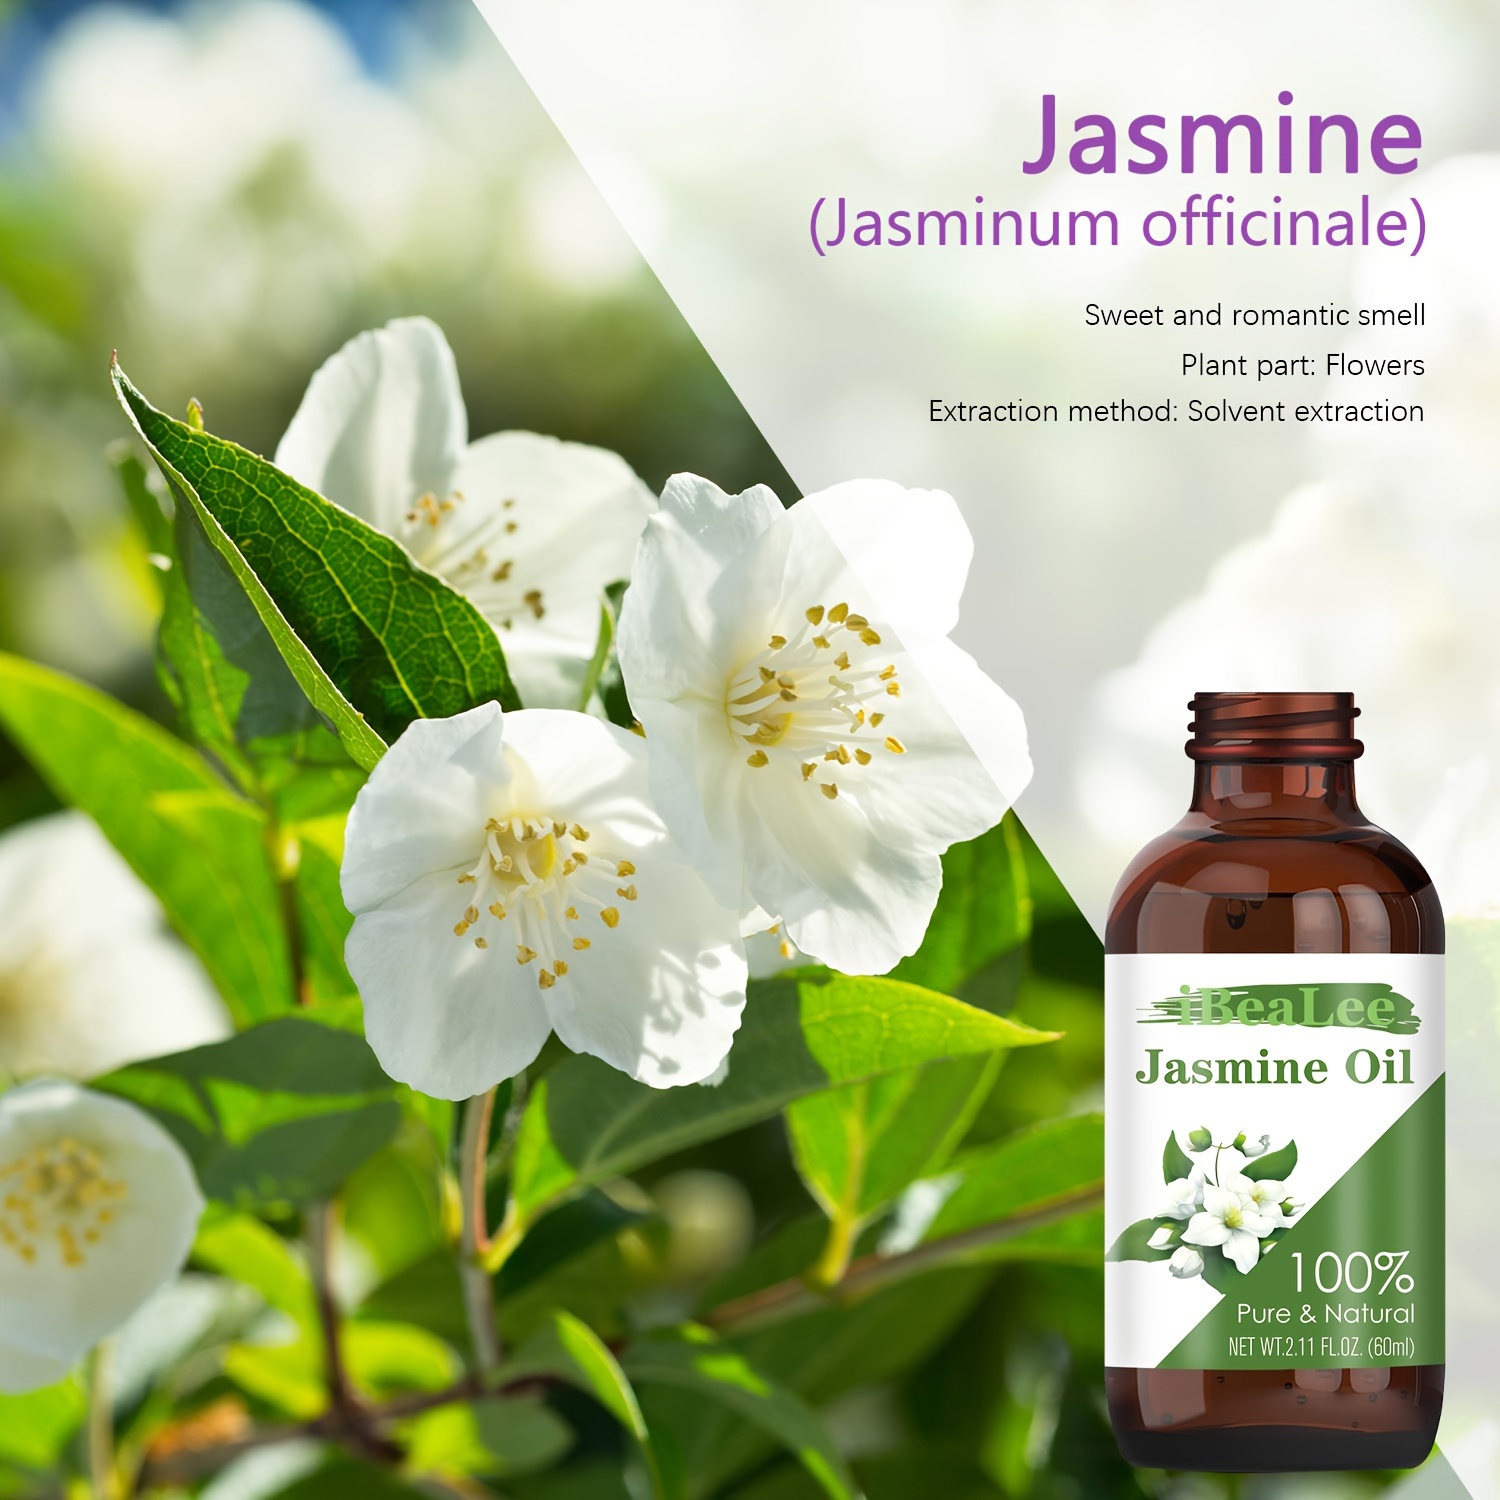 100+] Jasmine Flower Pictures